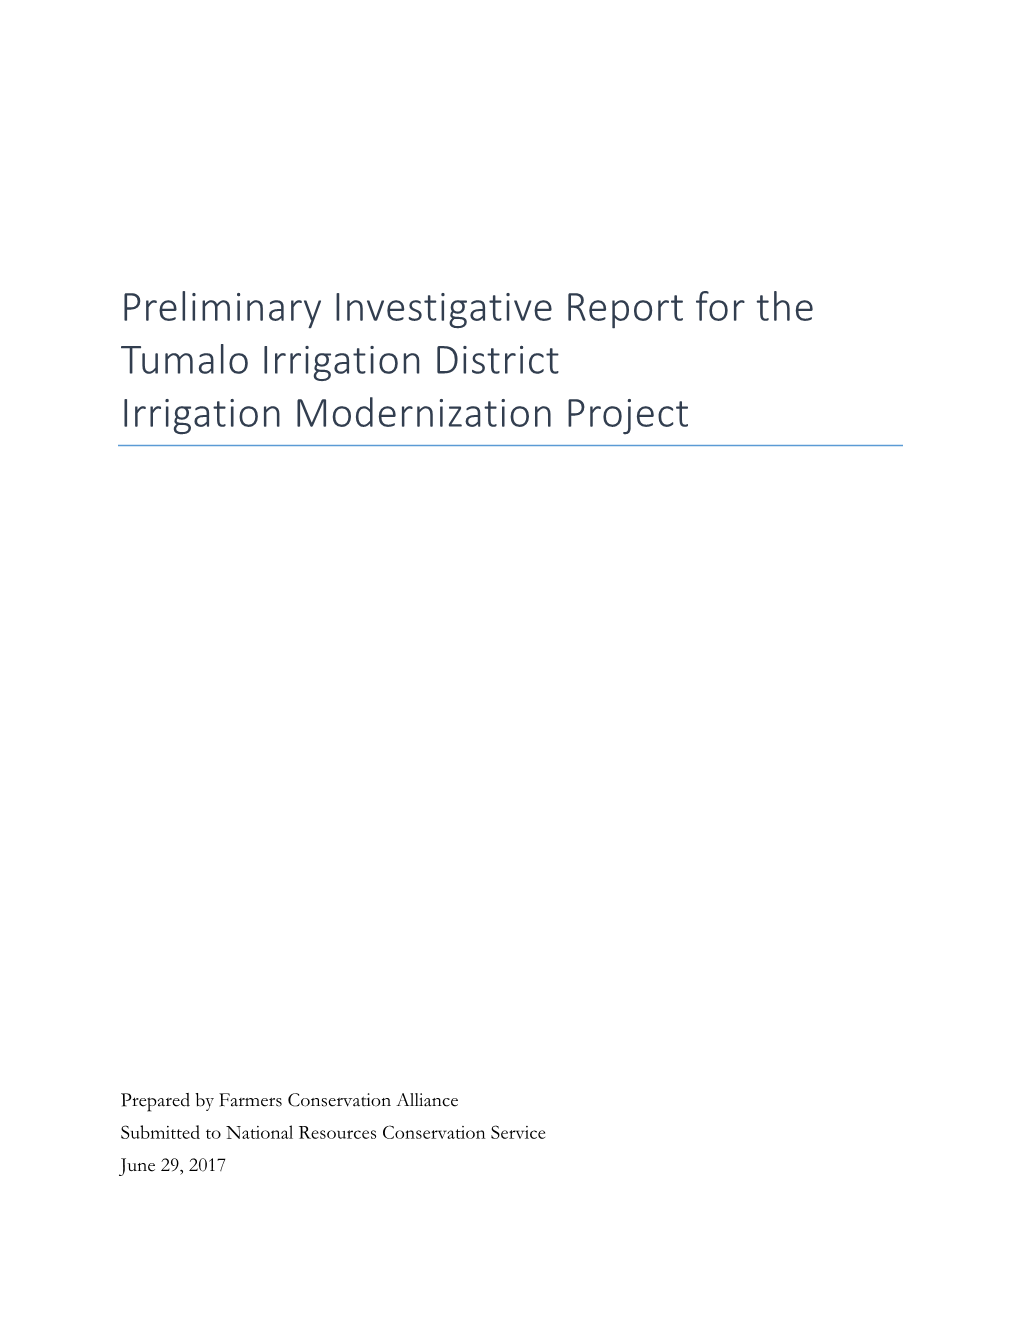 Preliminary Investigative Report for the Tumalo Irrigation District Irrigation Modernization Project